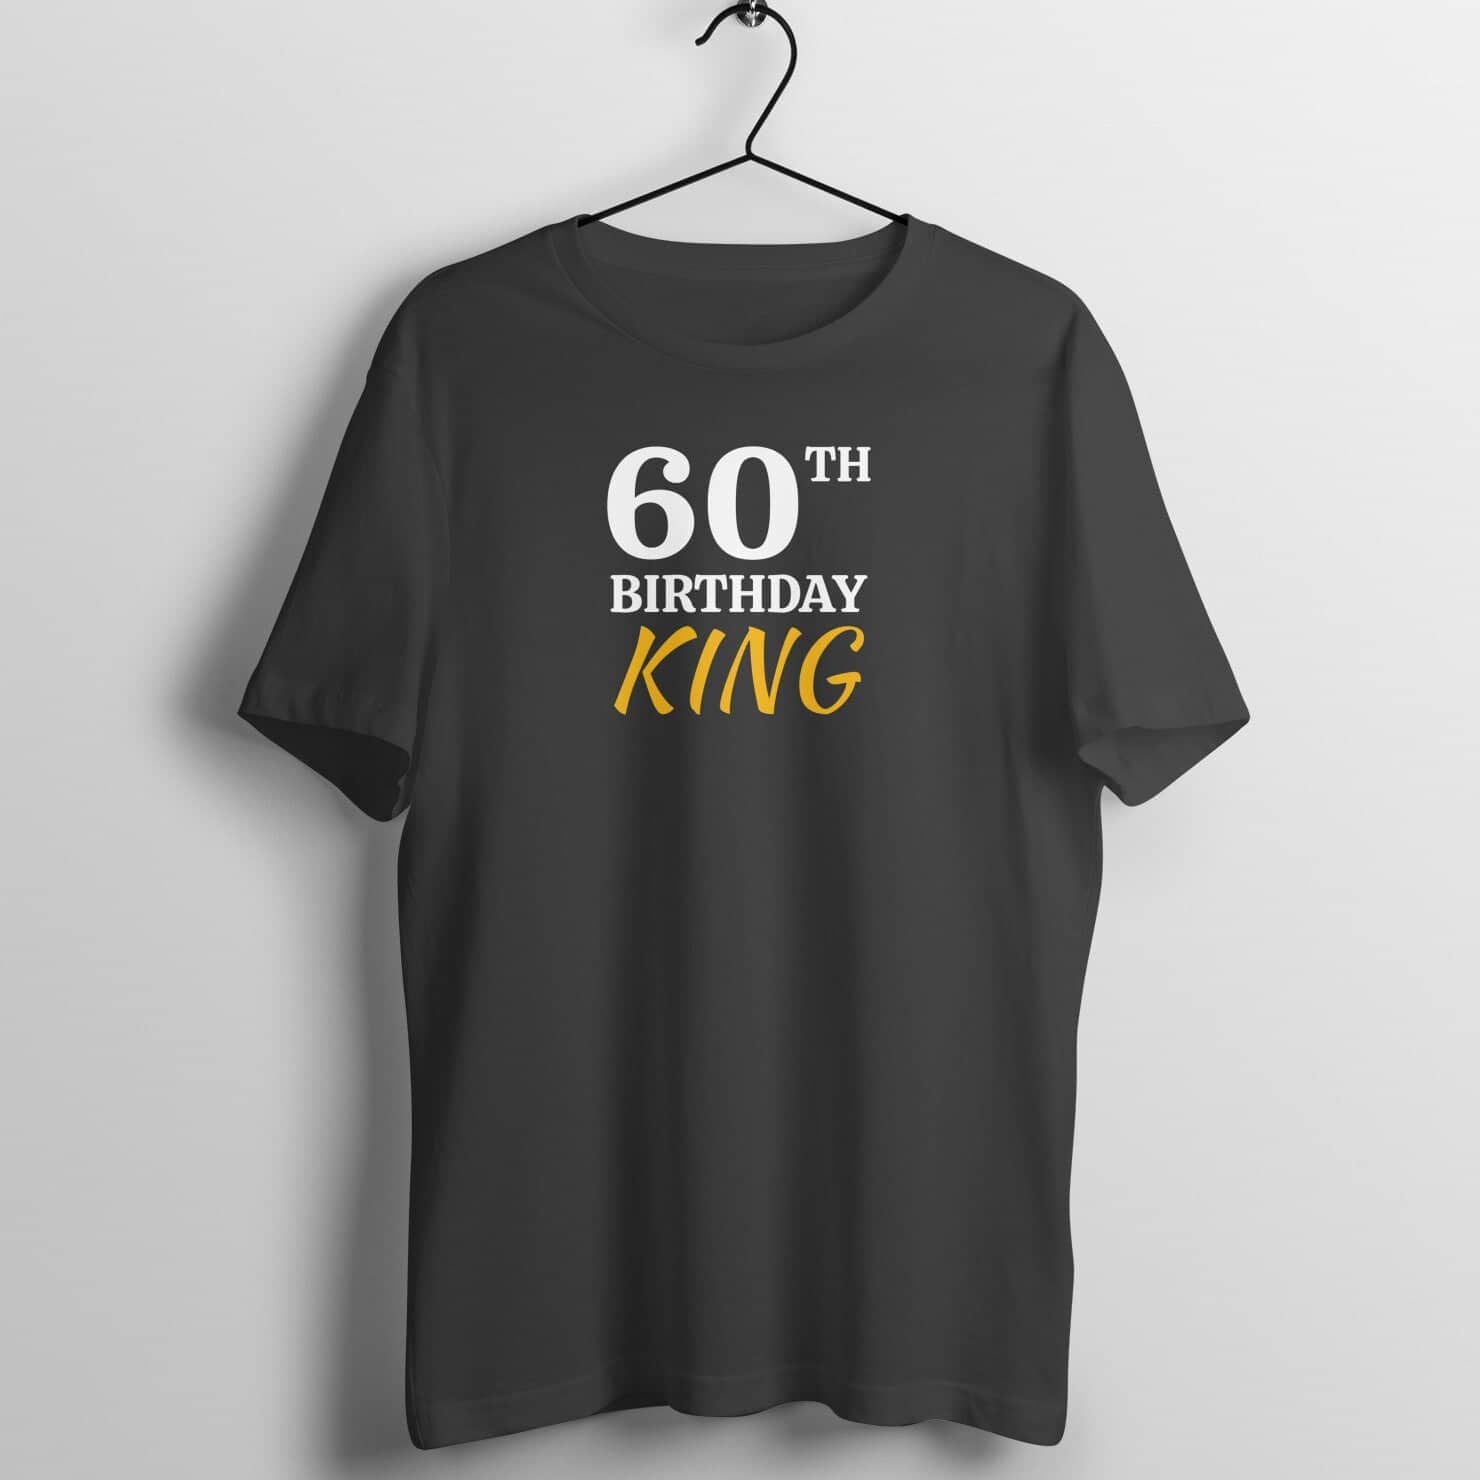 60th Birthday King Special Black T Shirt for Men Printrove Black S 